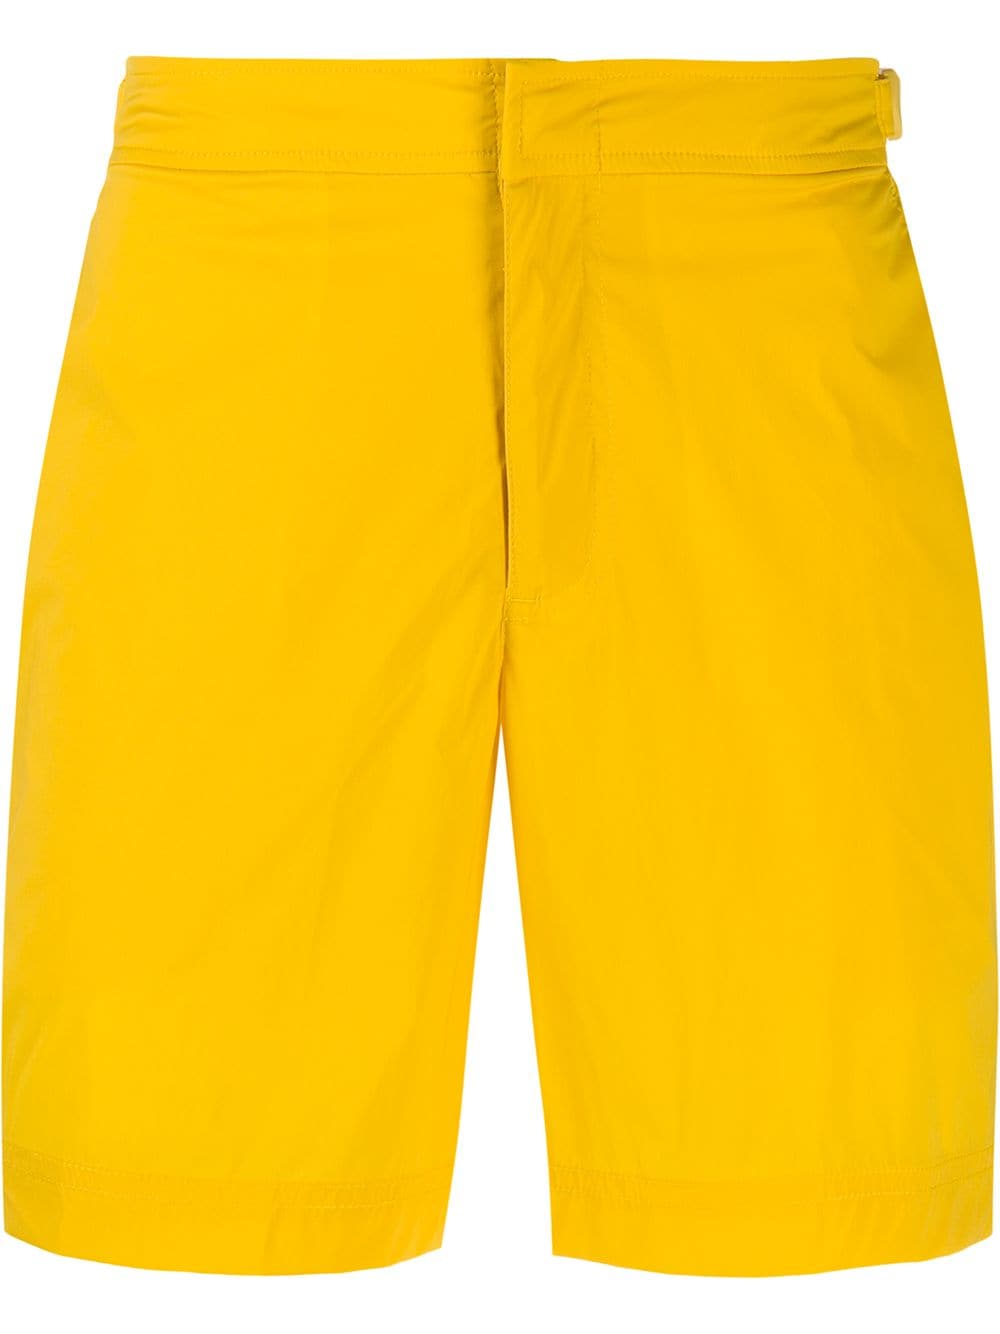 orlebar brown bulldog swim shorts - yellow